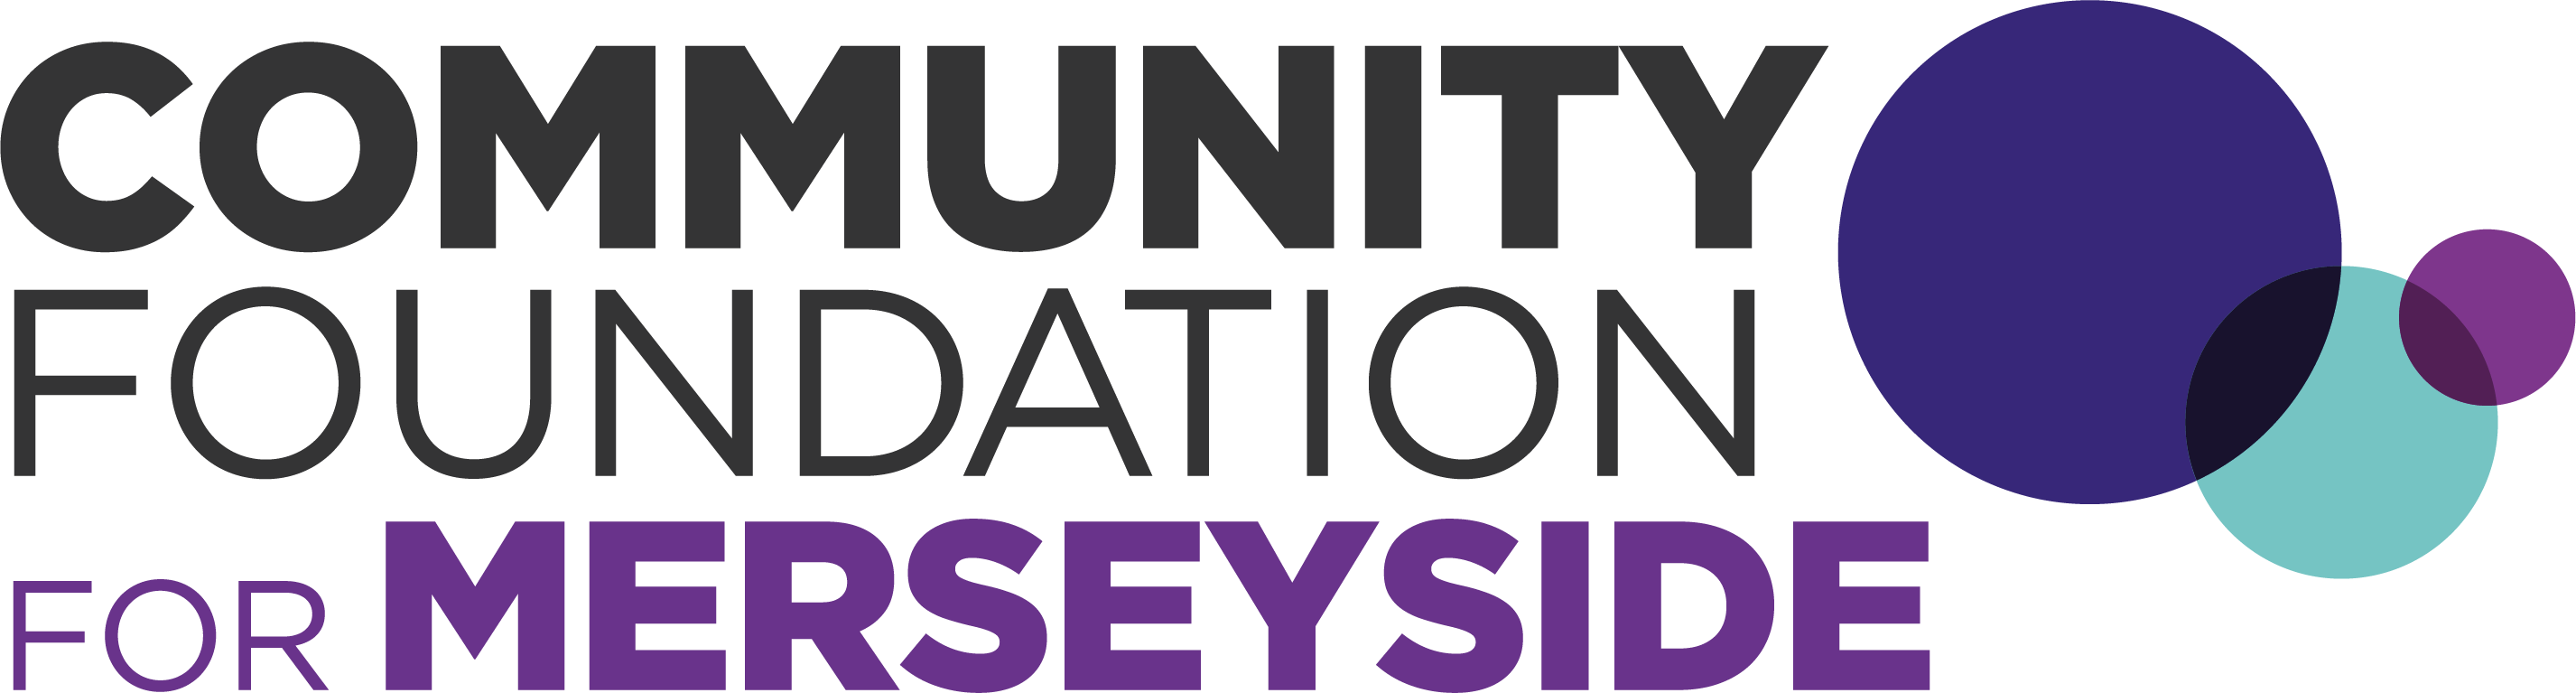 Community Foundation for Merseyside Logo